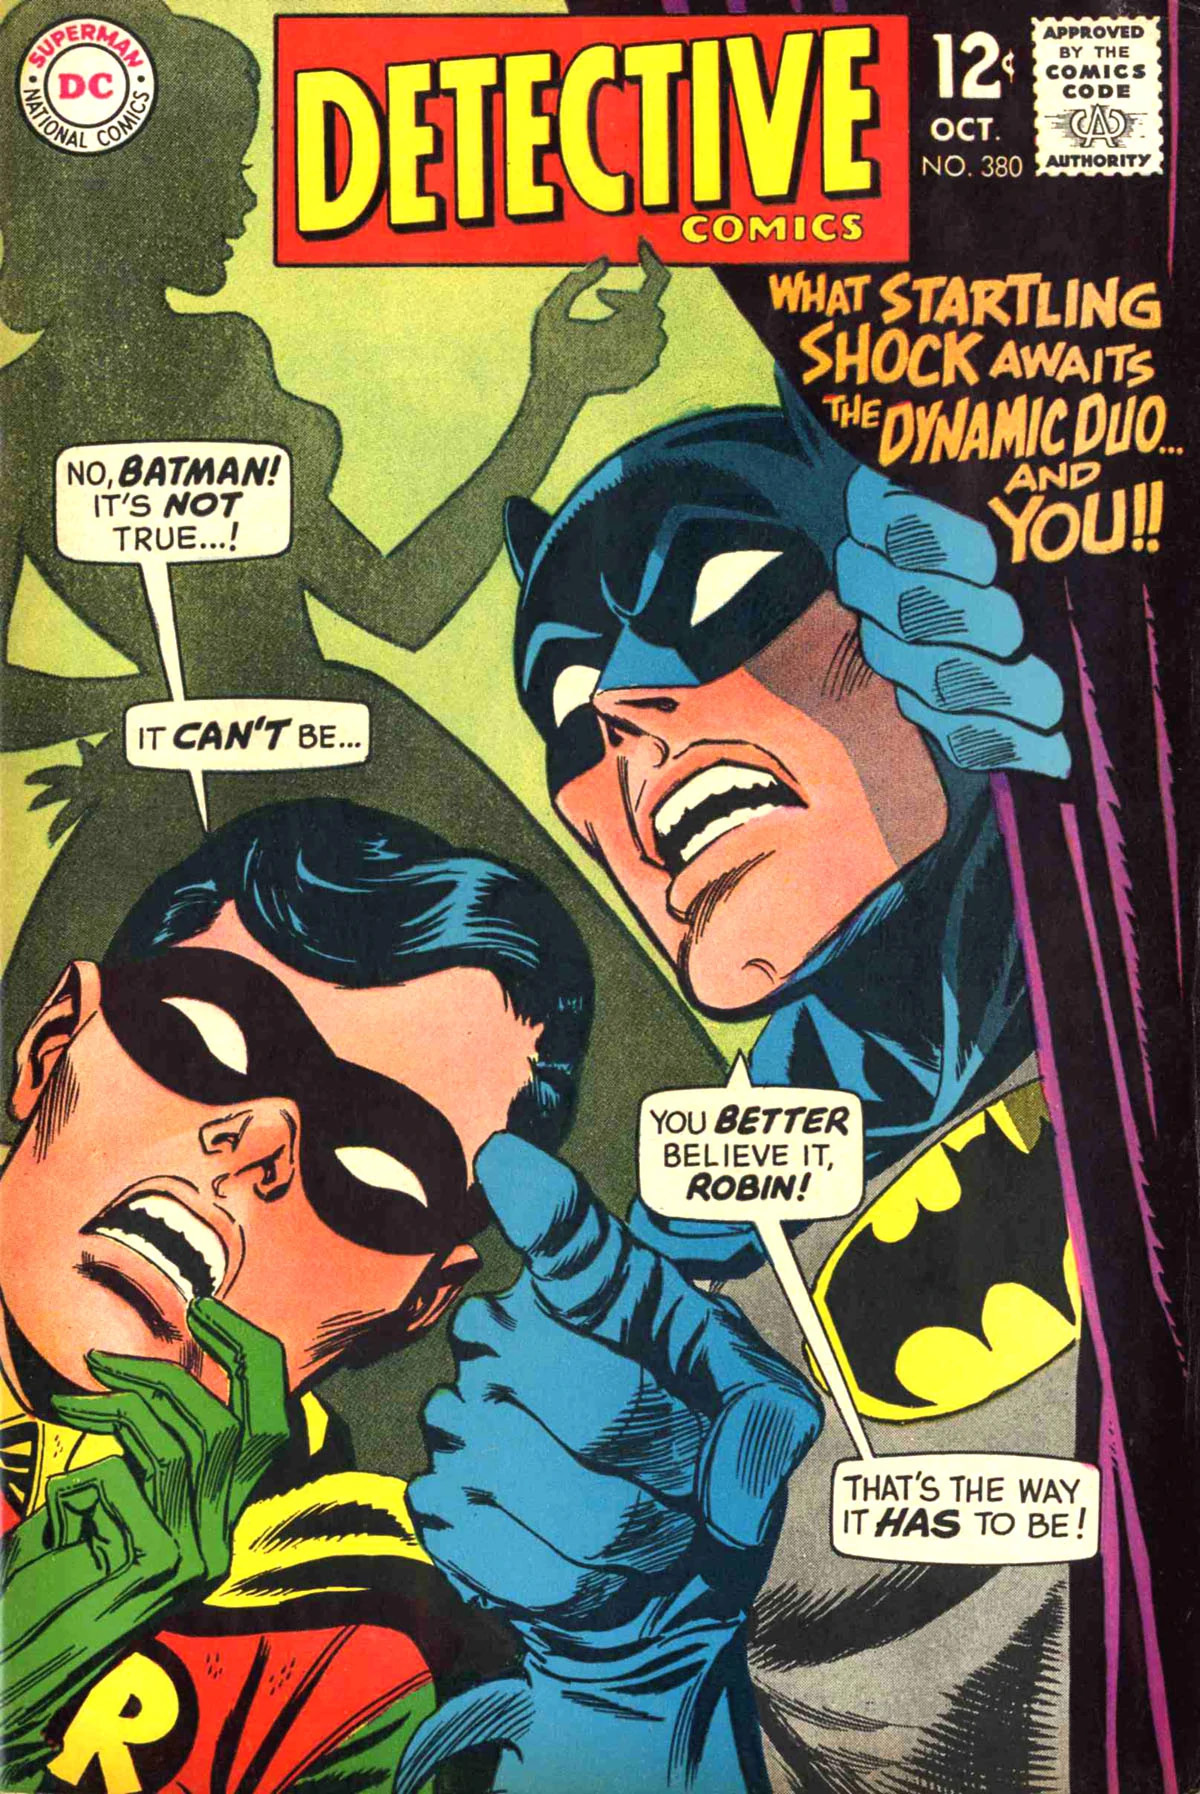 Detective Comics #380, cover, art by Irv Novick